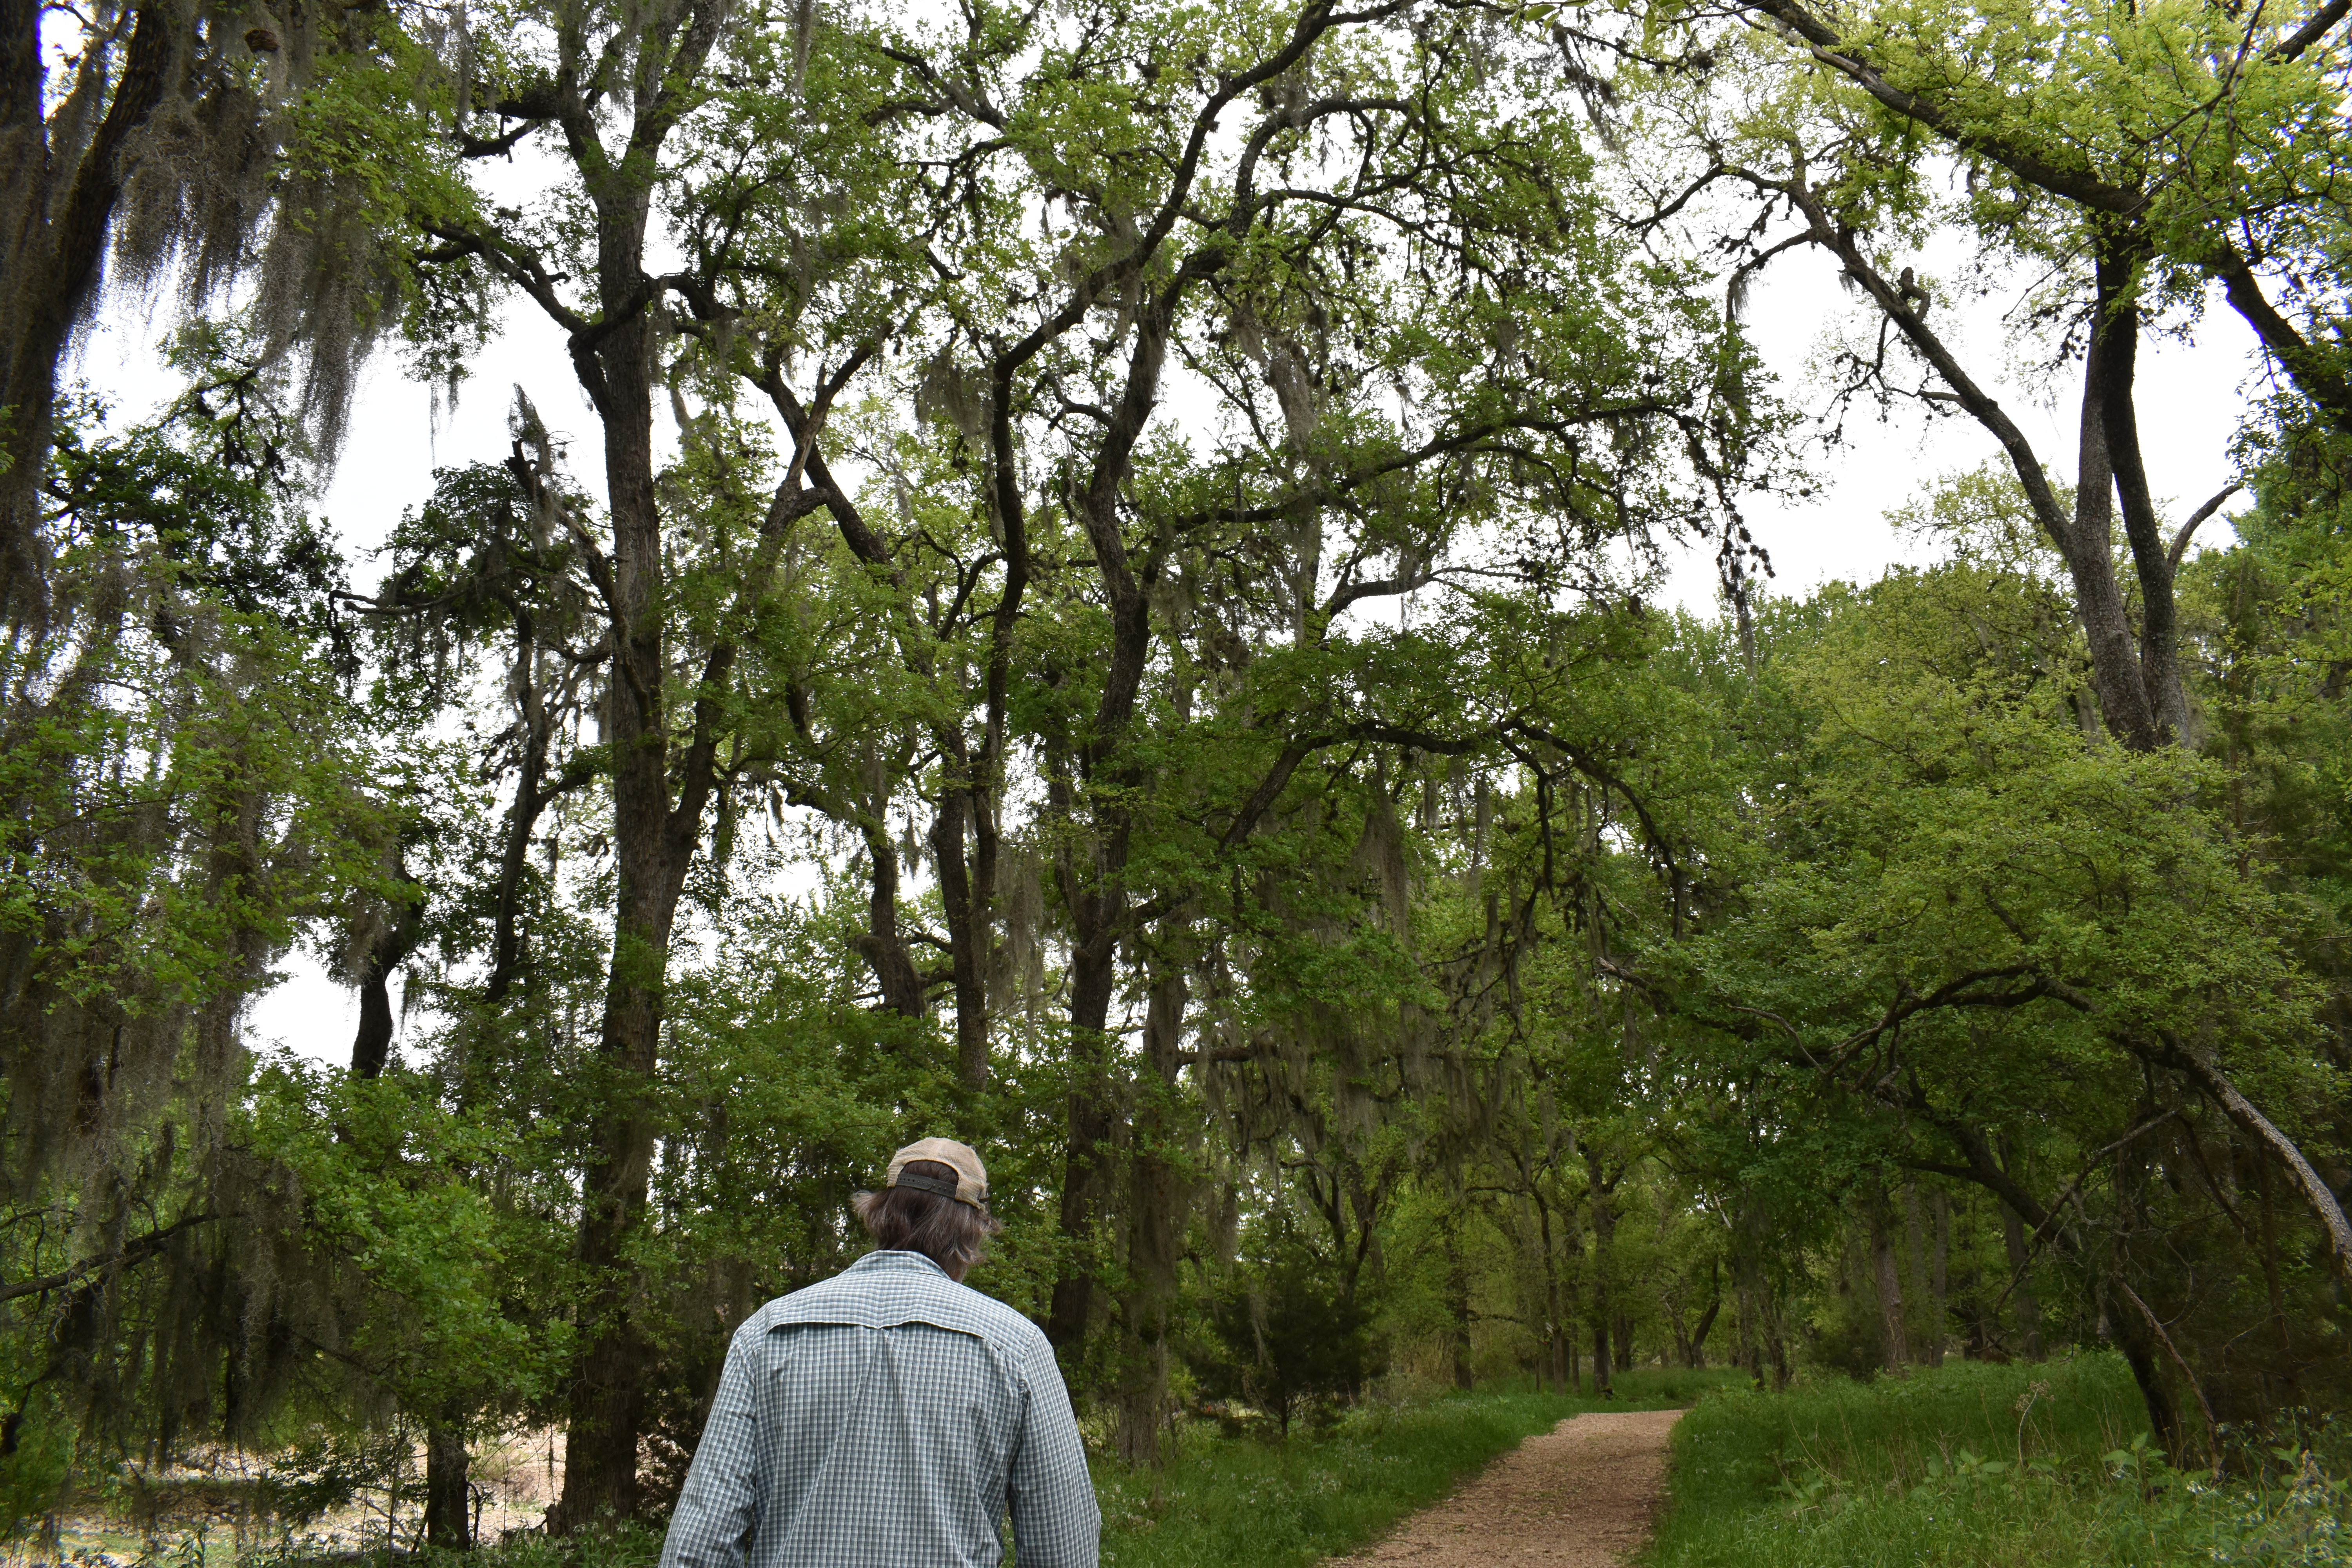 Scott Henize guides a tour under trees through the purgatory creek natural area.